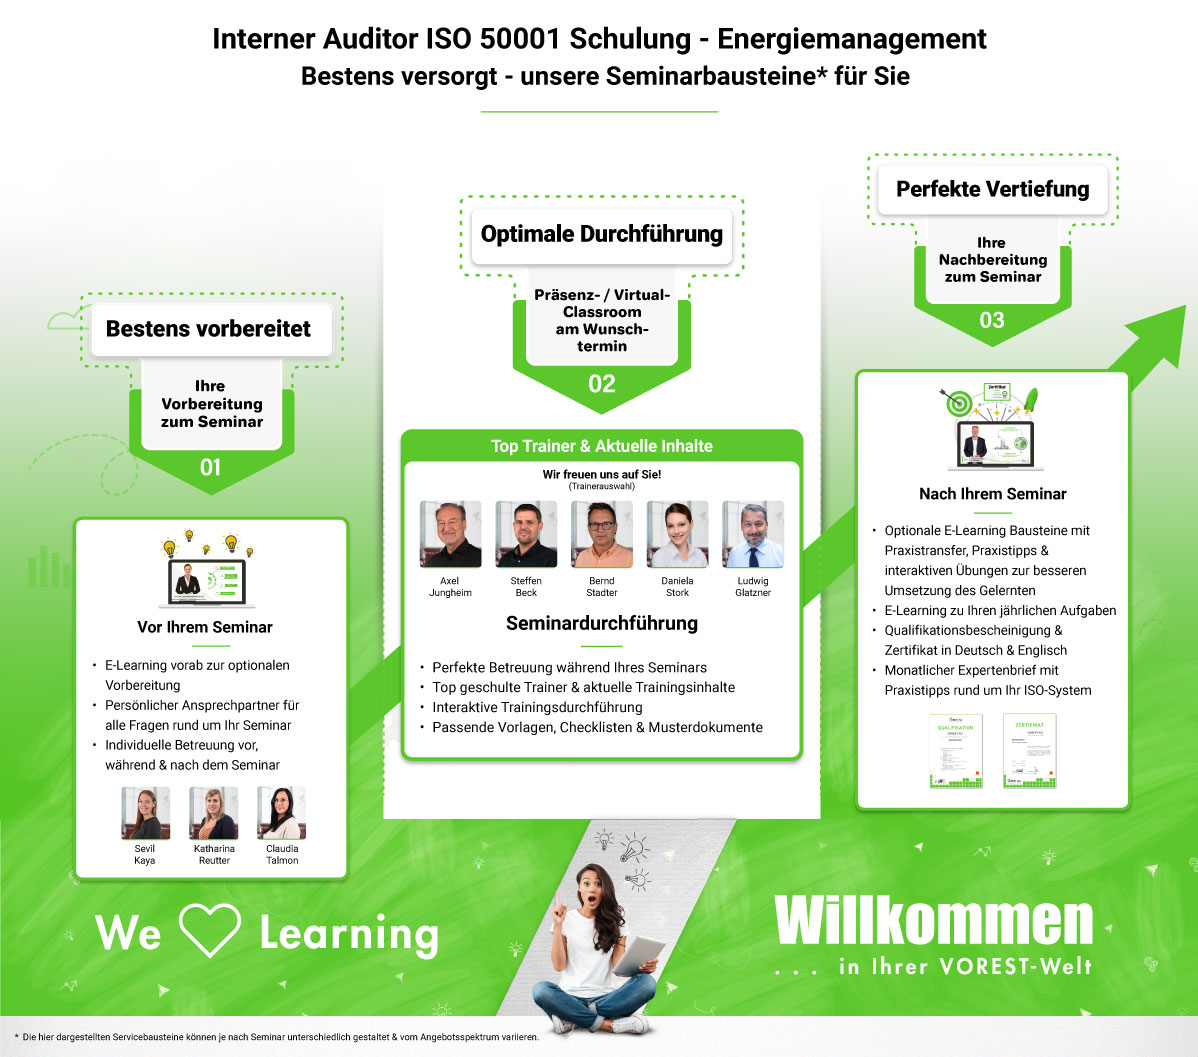 Interner Auditor ISO 50001 Schulung - Energiemanagement